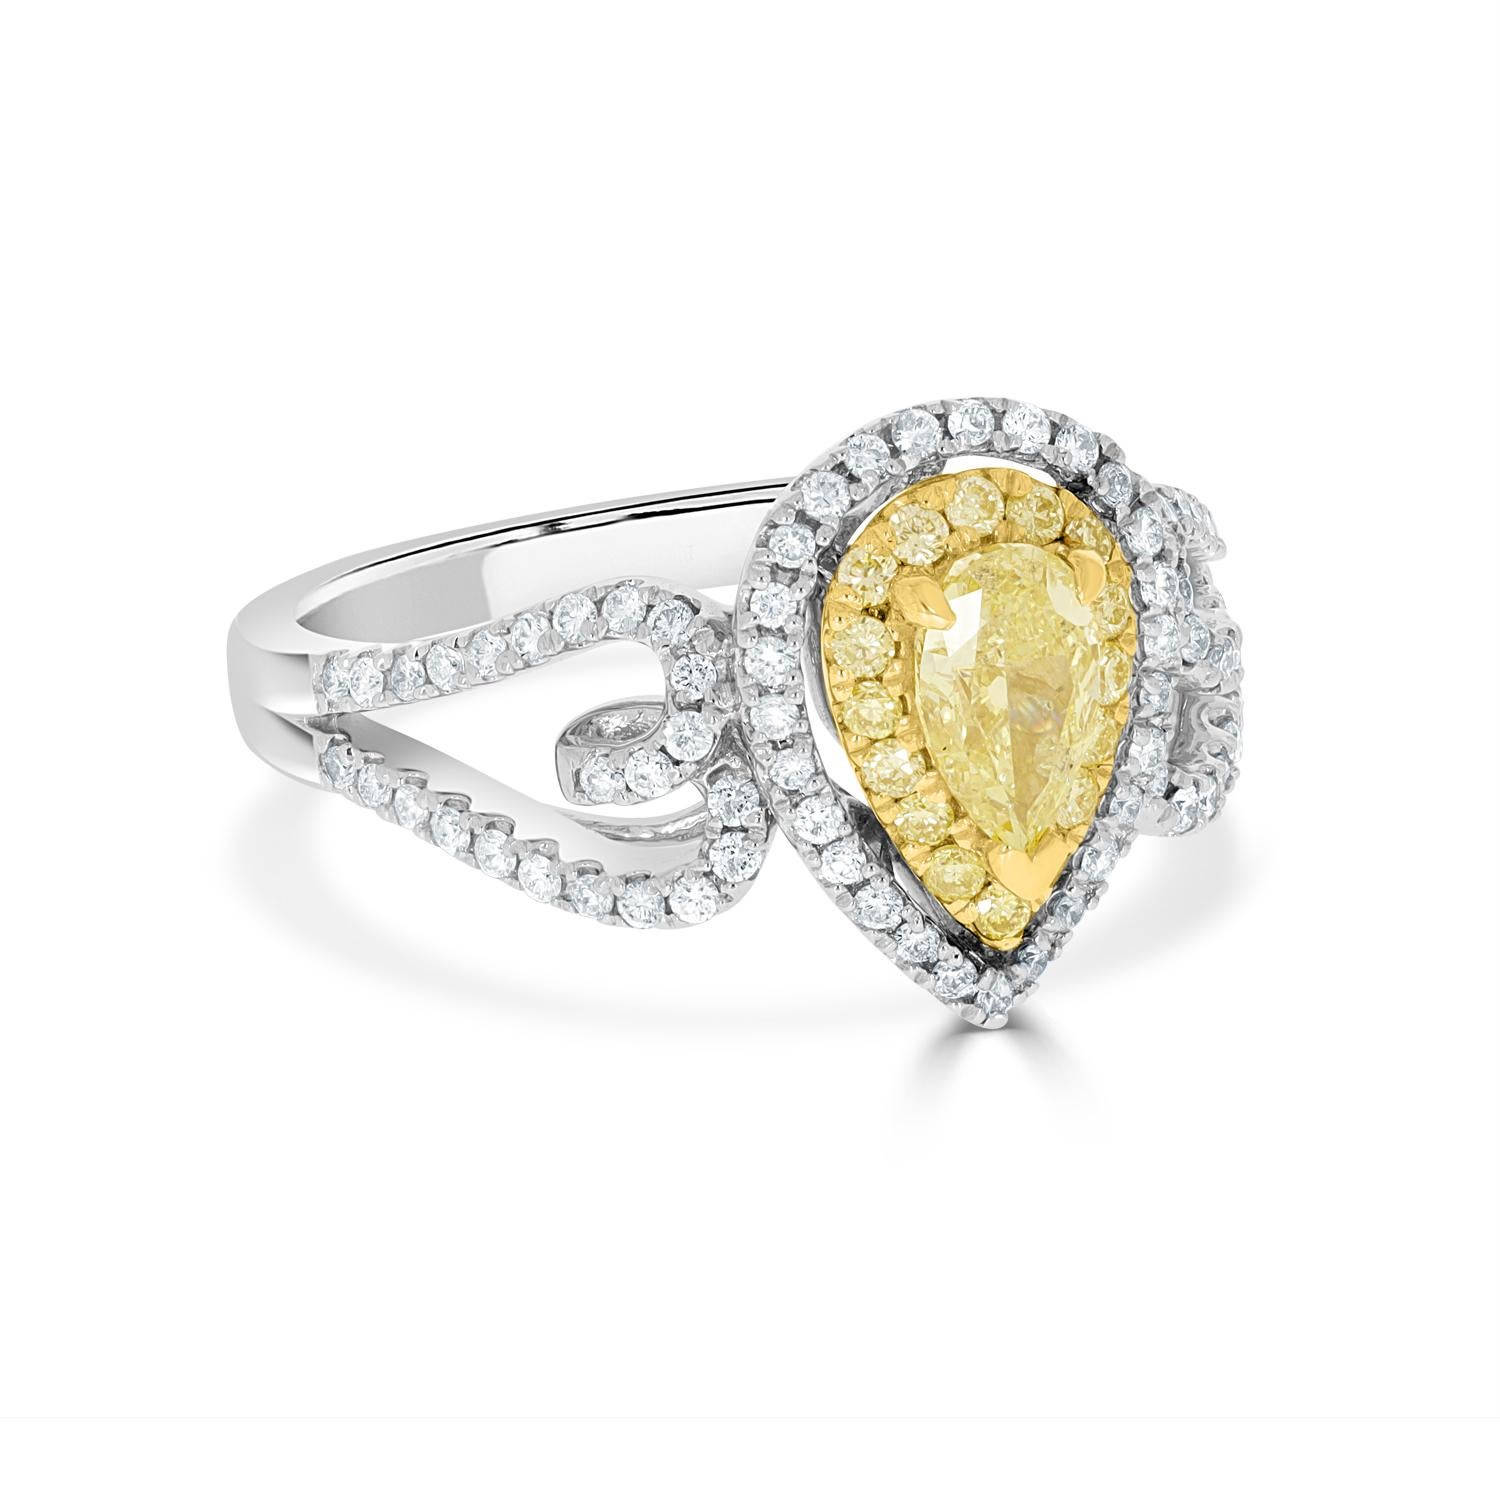 Cushion Cut 0.51tct Yellow Diamond Ring with 0.41tct Diamonds Set in 14k Two Tone Gold